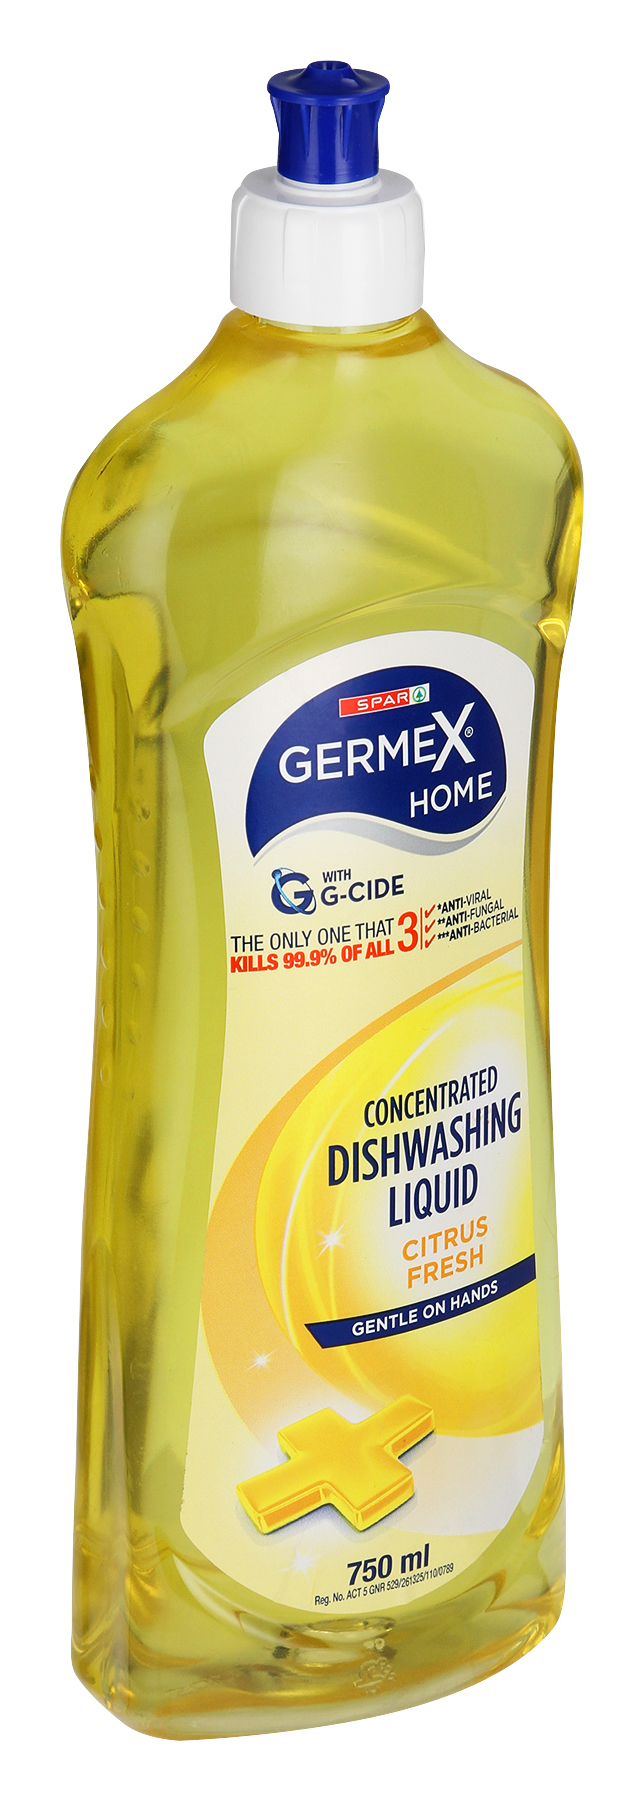 germex dishwashing liquid citrus